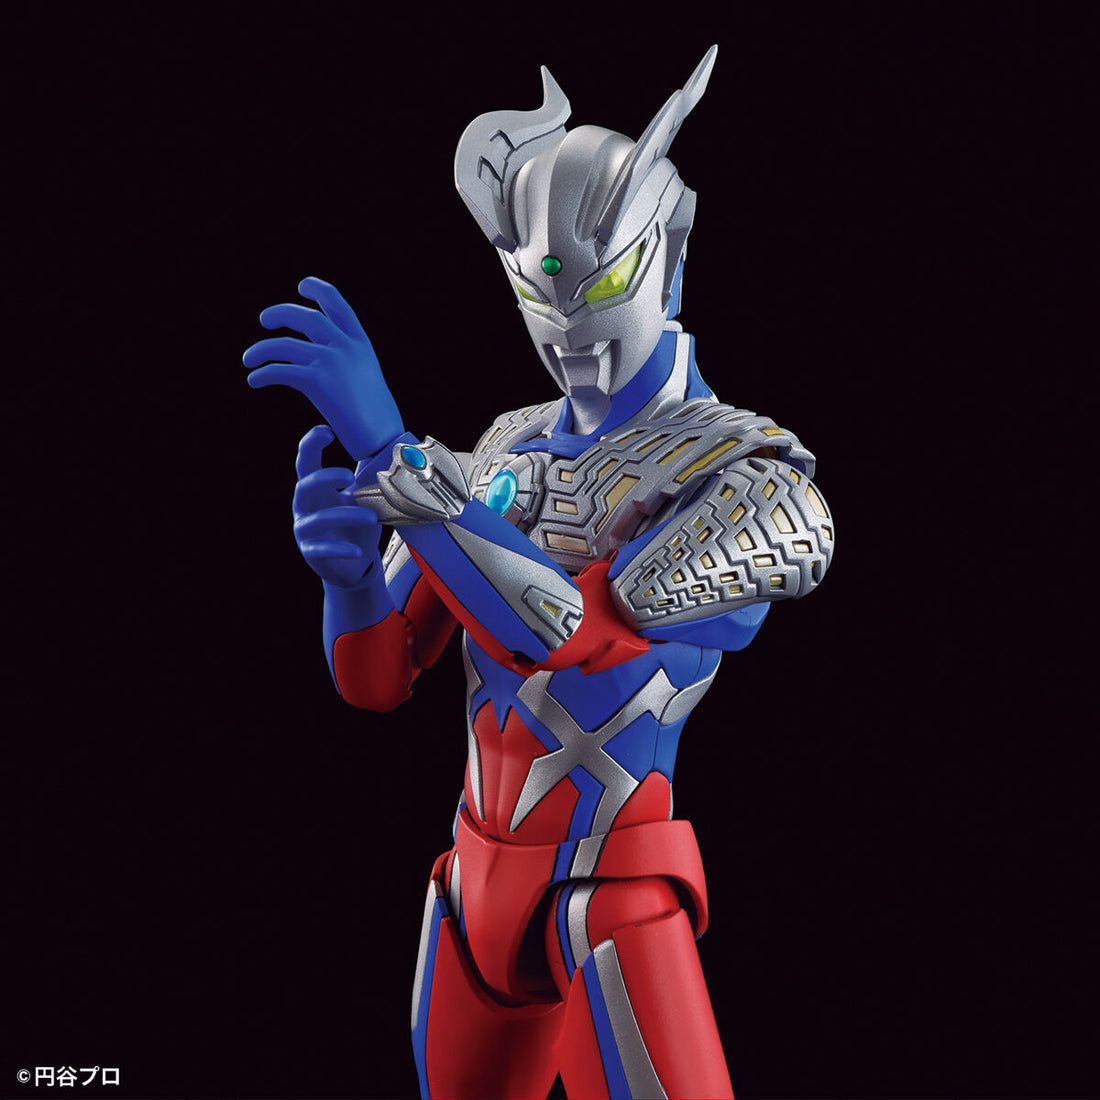 Ultraman Zero Figure-rise Standard - Glacier Hobbies - Bandai